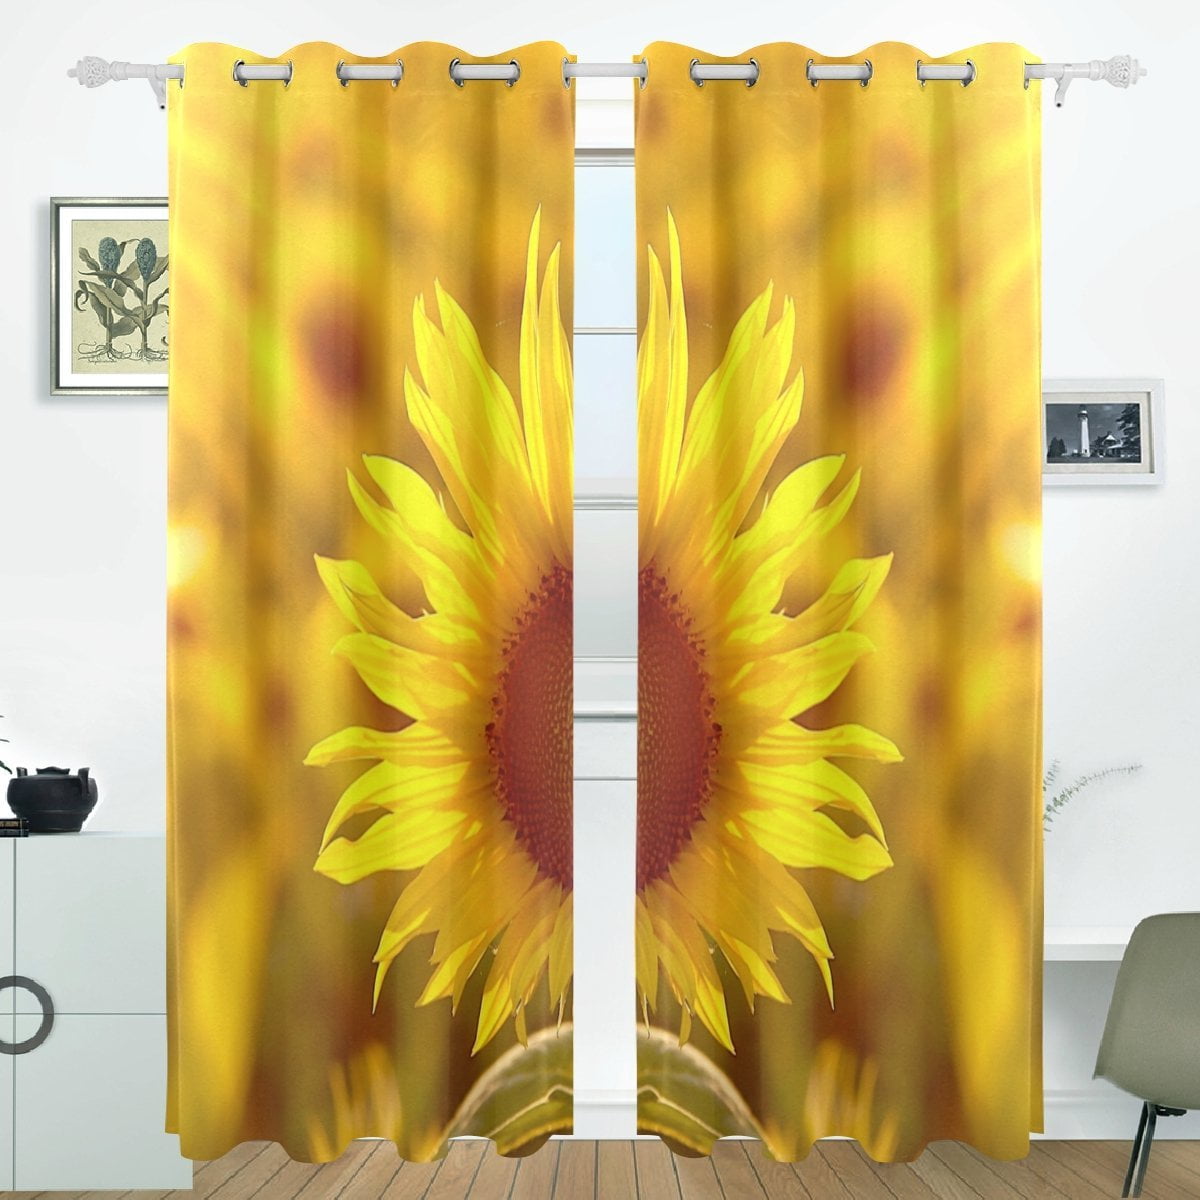 2 Panels Blooming Sunflowers Room Darkening Insulated Blockout Window Curtain 